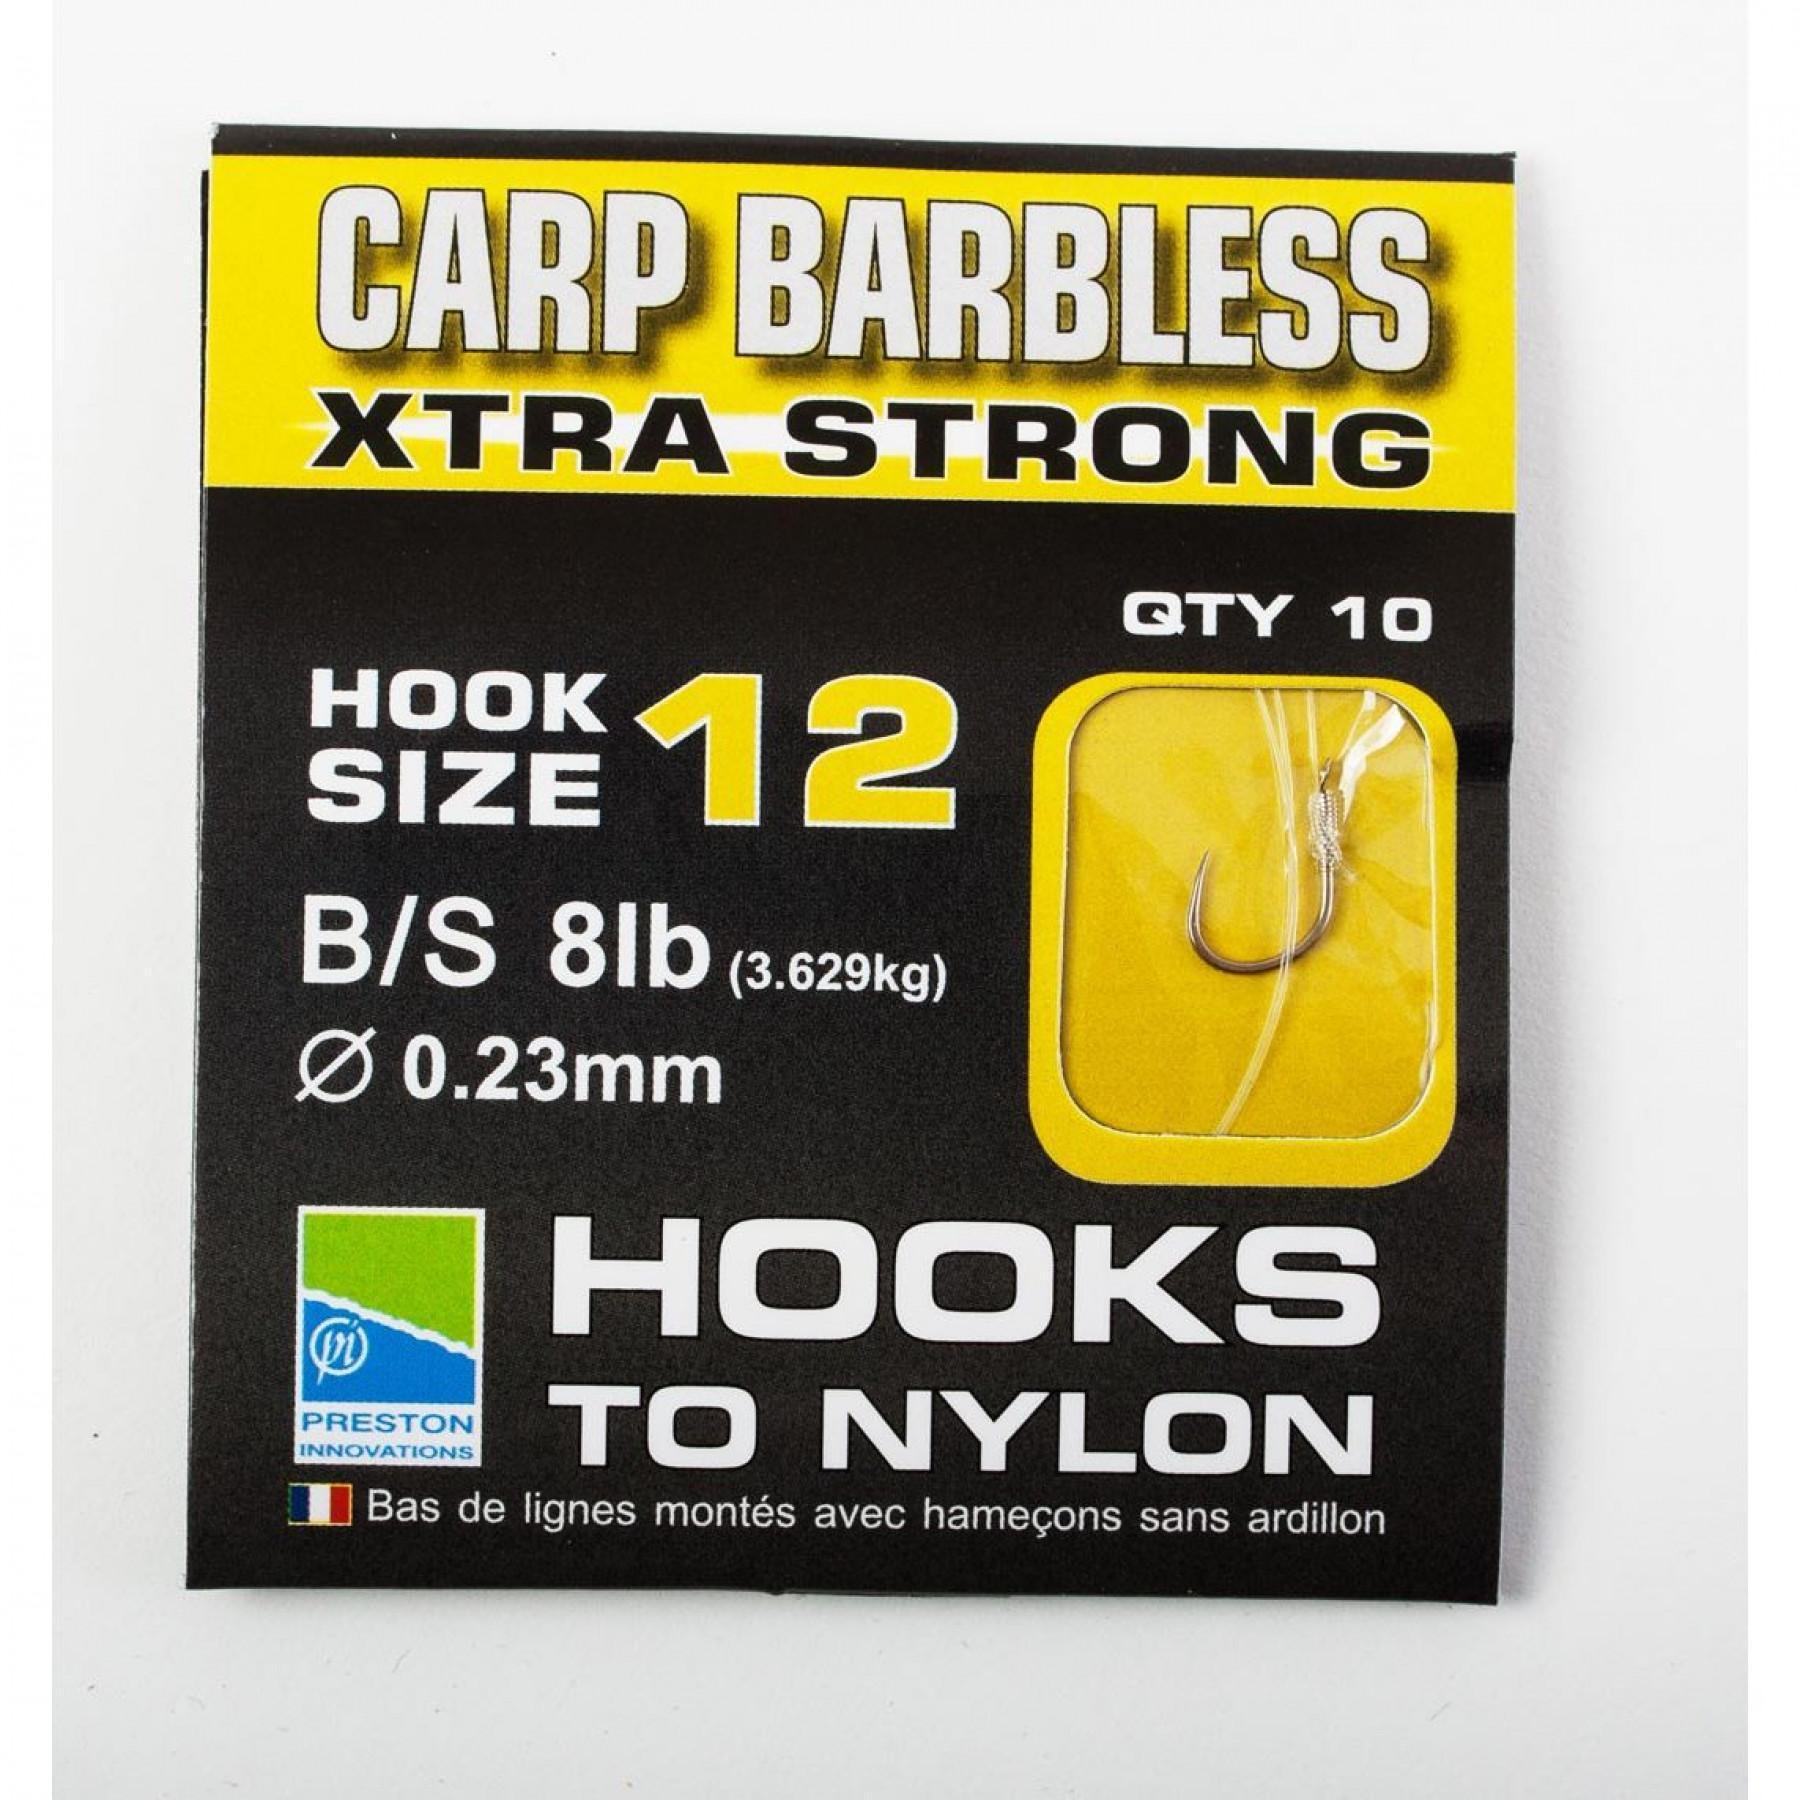 Preston Innovations 2 x Carp Barbless Xtra Strong Hooks to Nylon packs ALL SIZES 